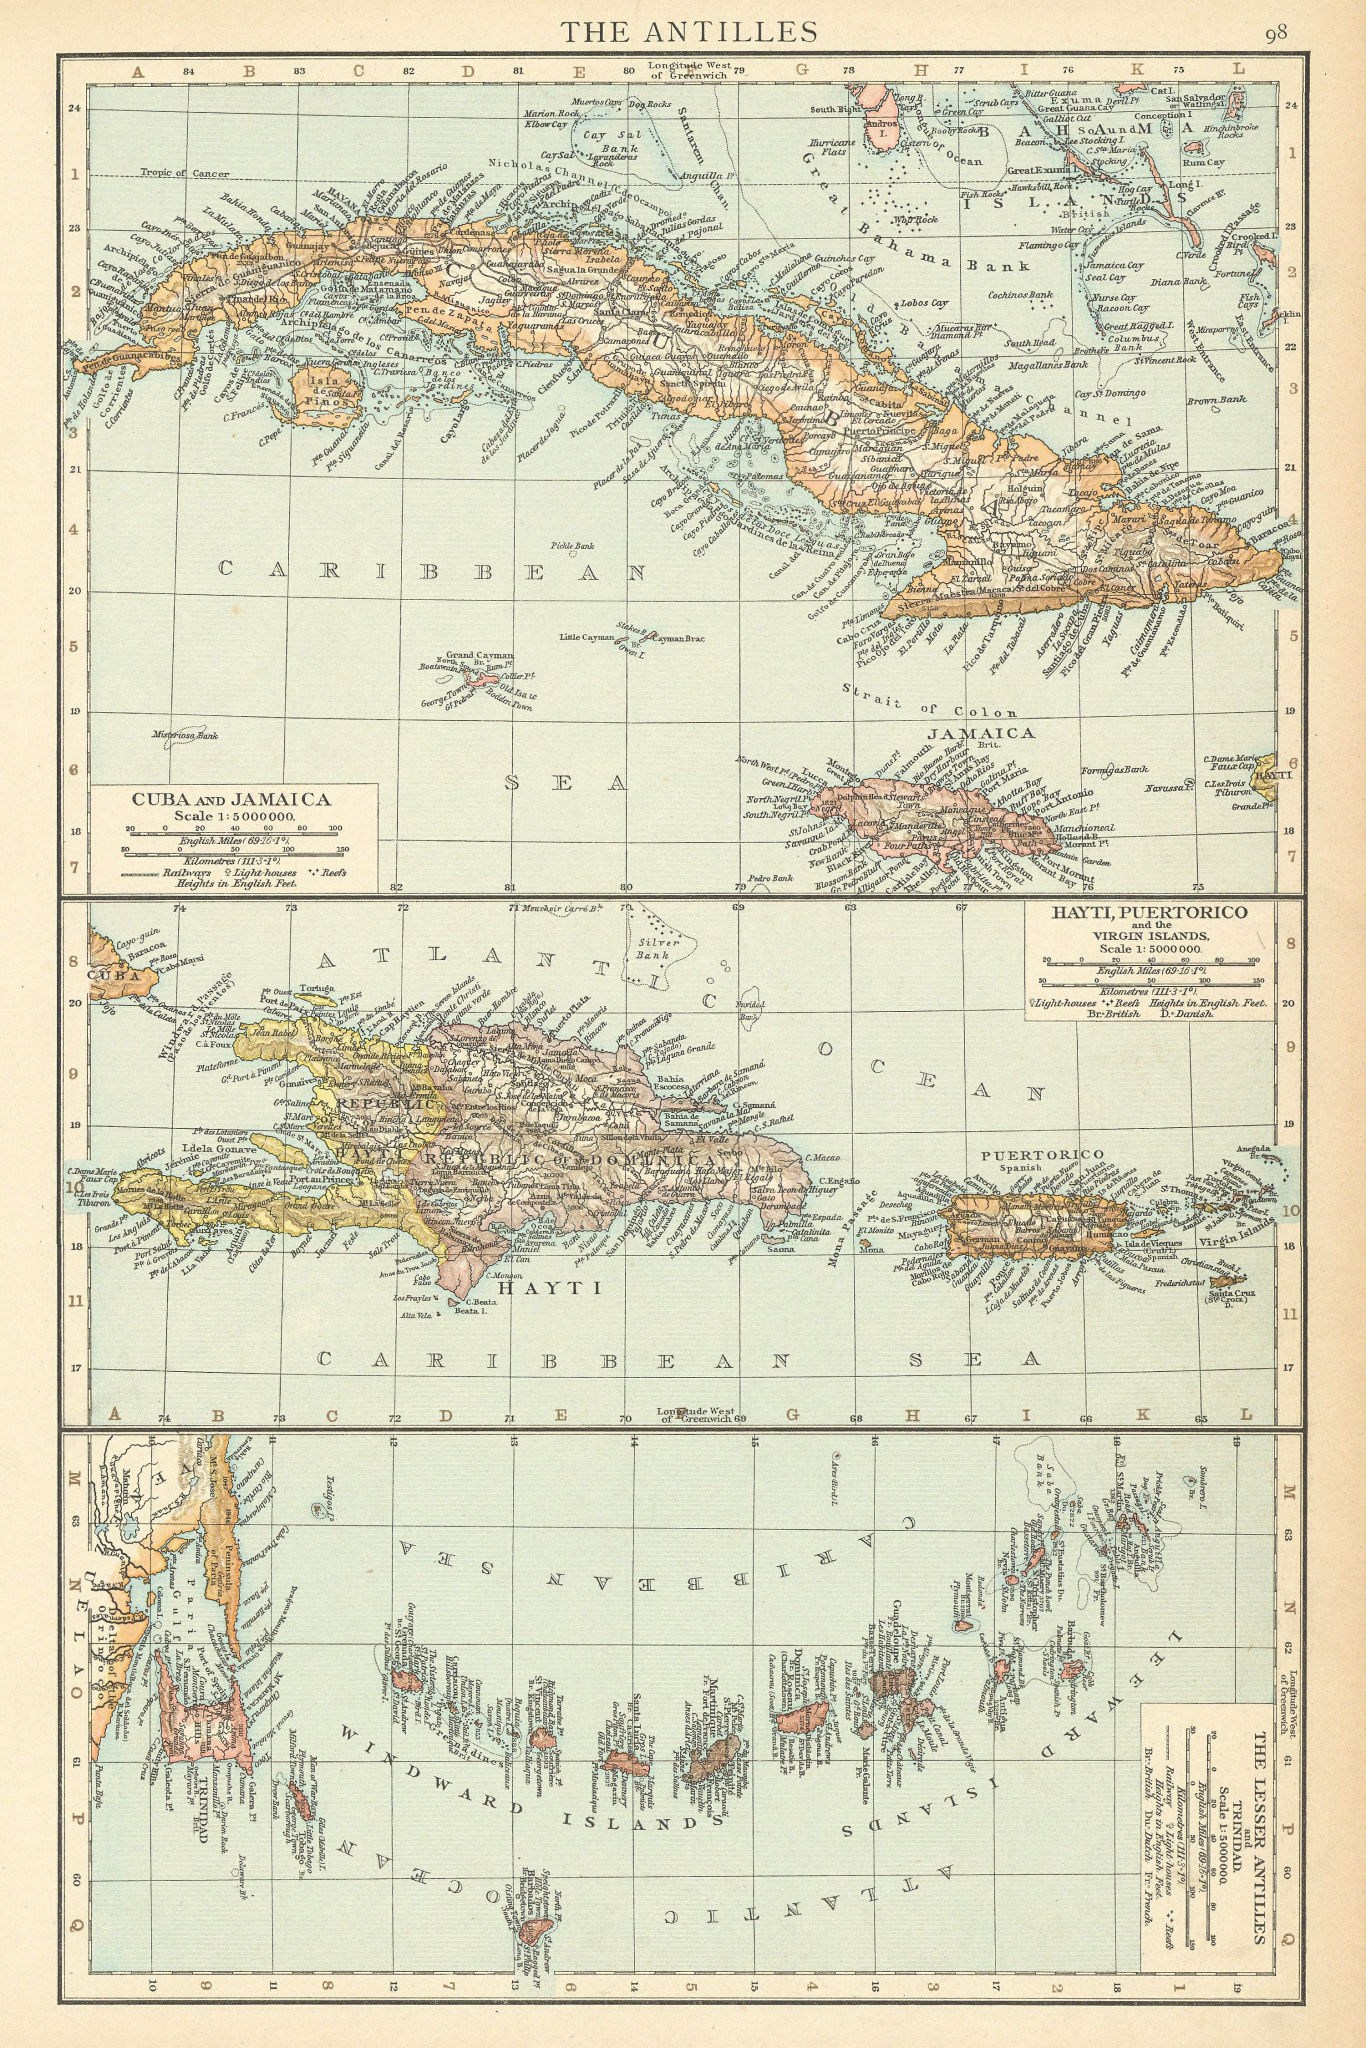 Associate Product Antilles. West Indies Cuba Jamaica Hispaniola Caribbean islands TIMES 1895 map